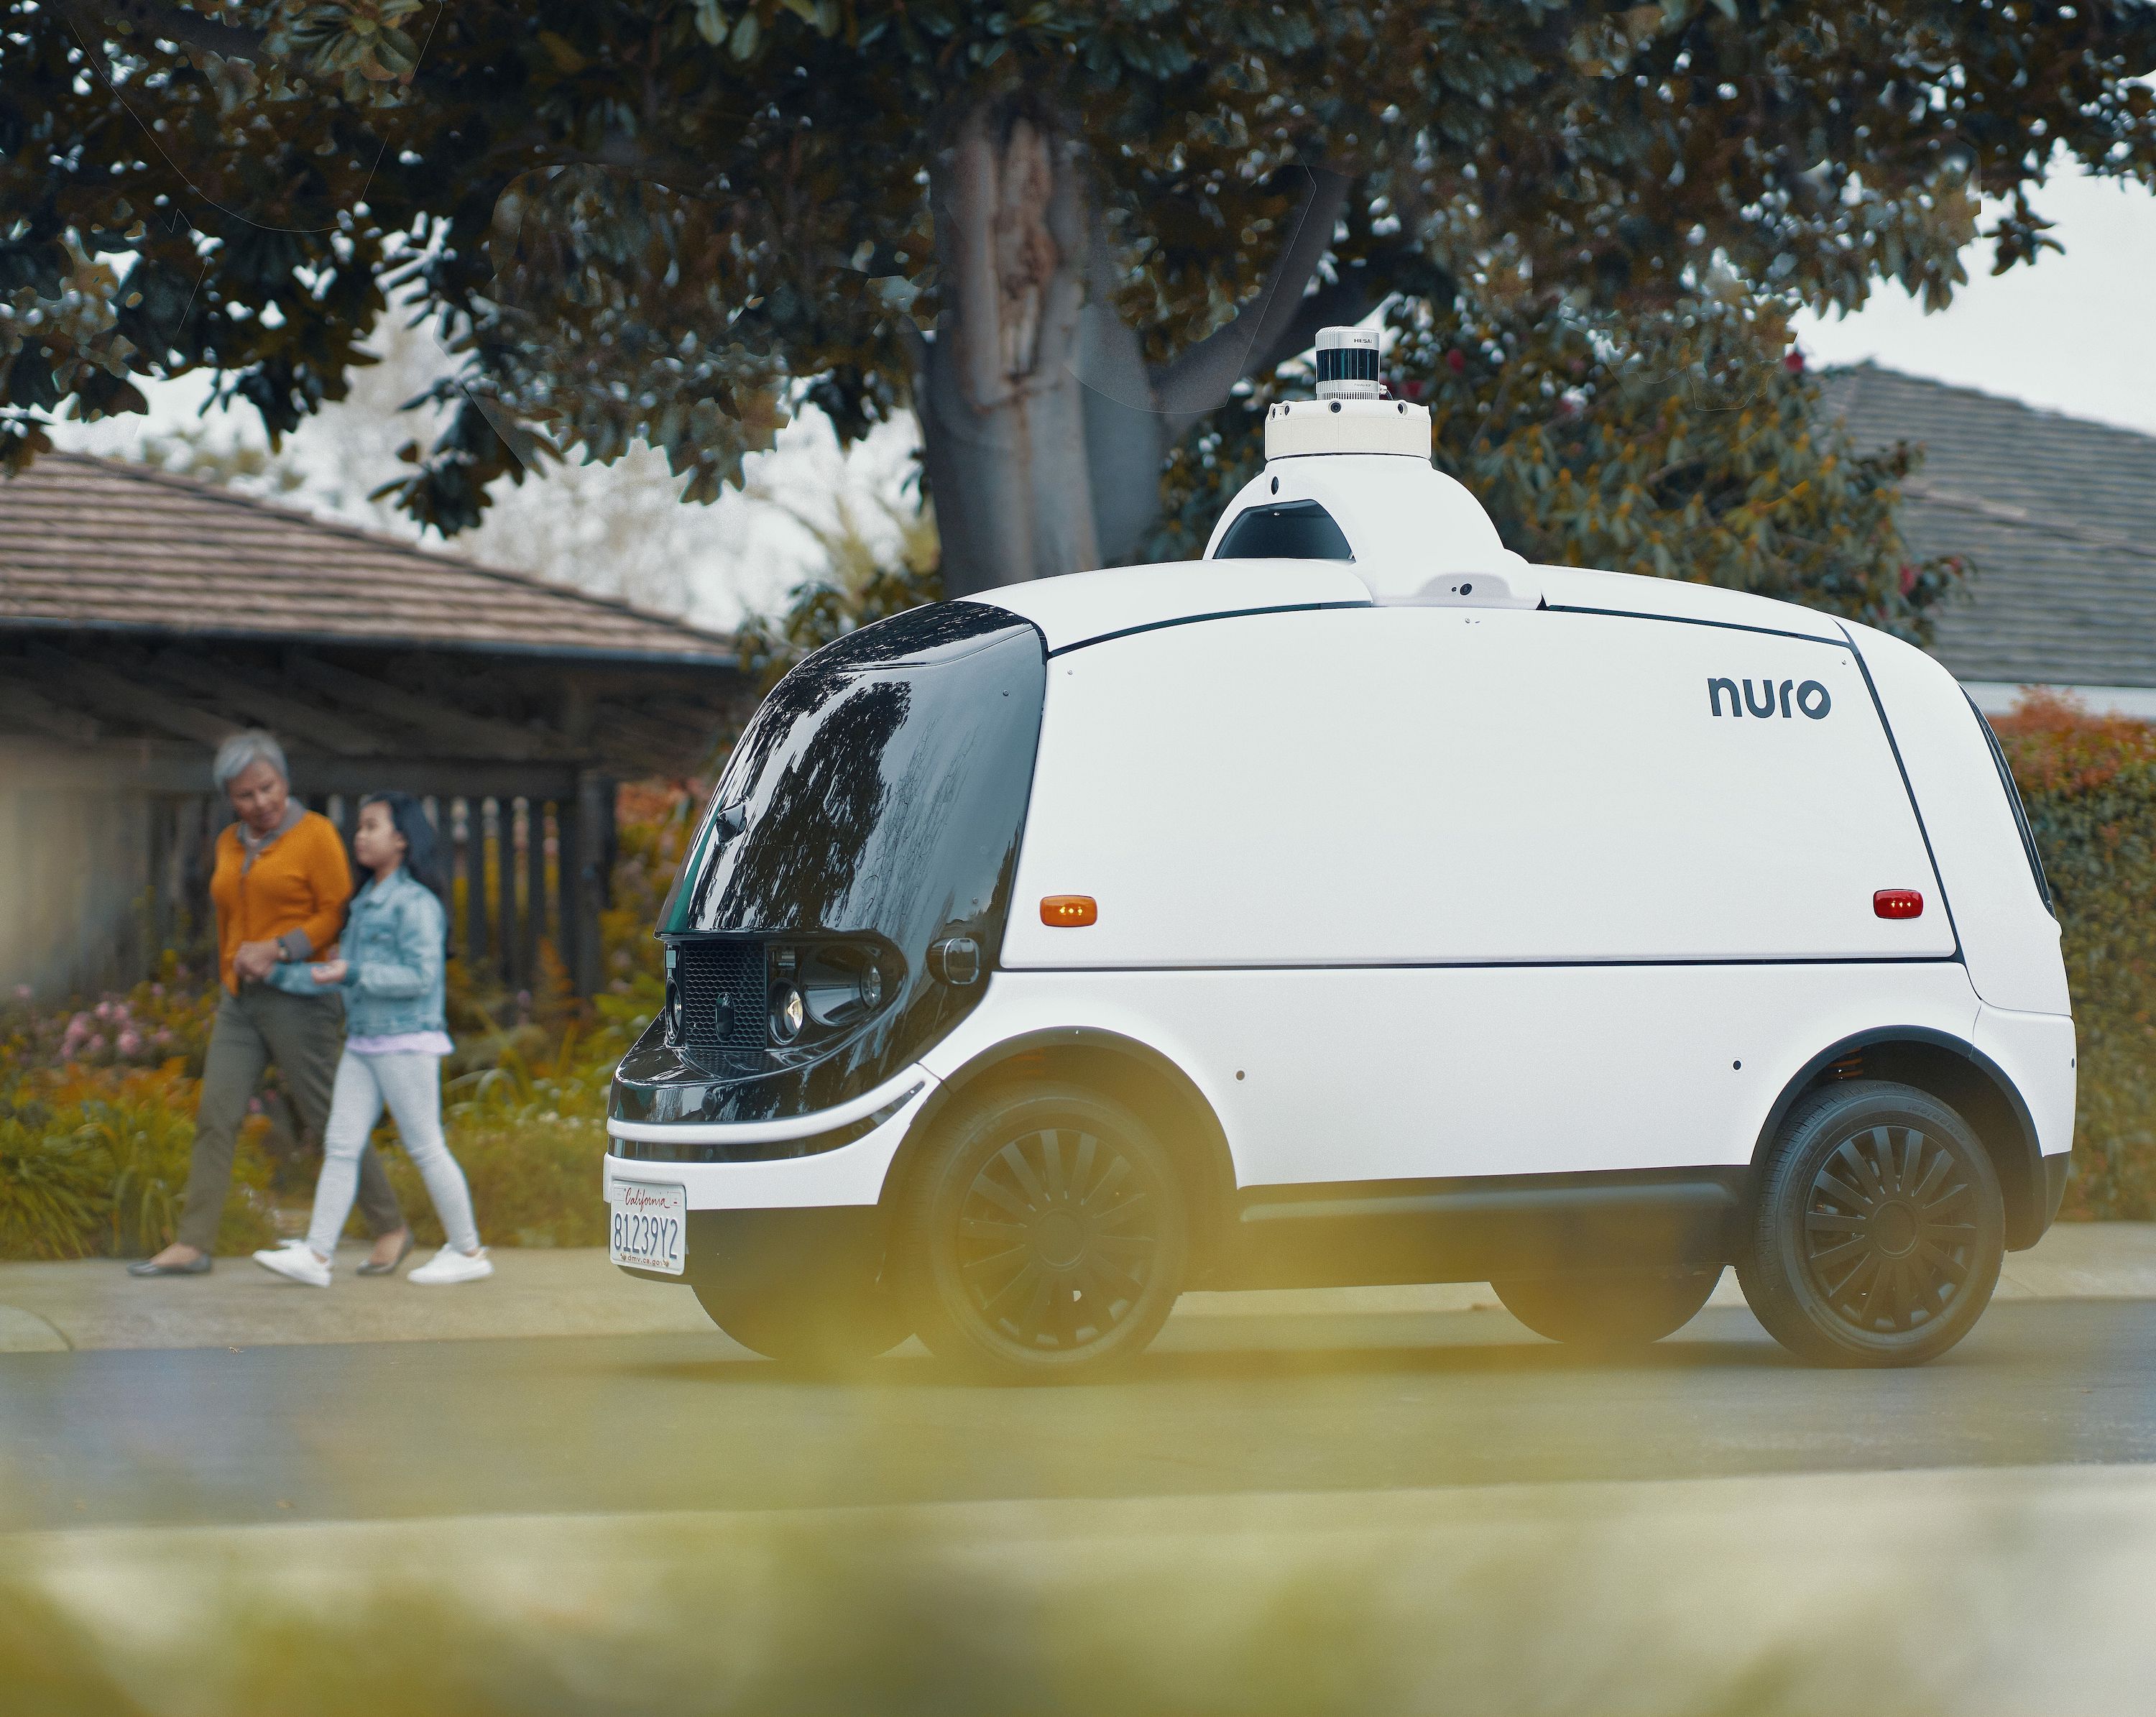 Nuro R2 autonomous vehicle on a street in the suburbs